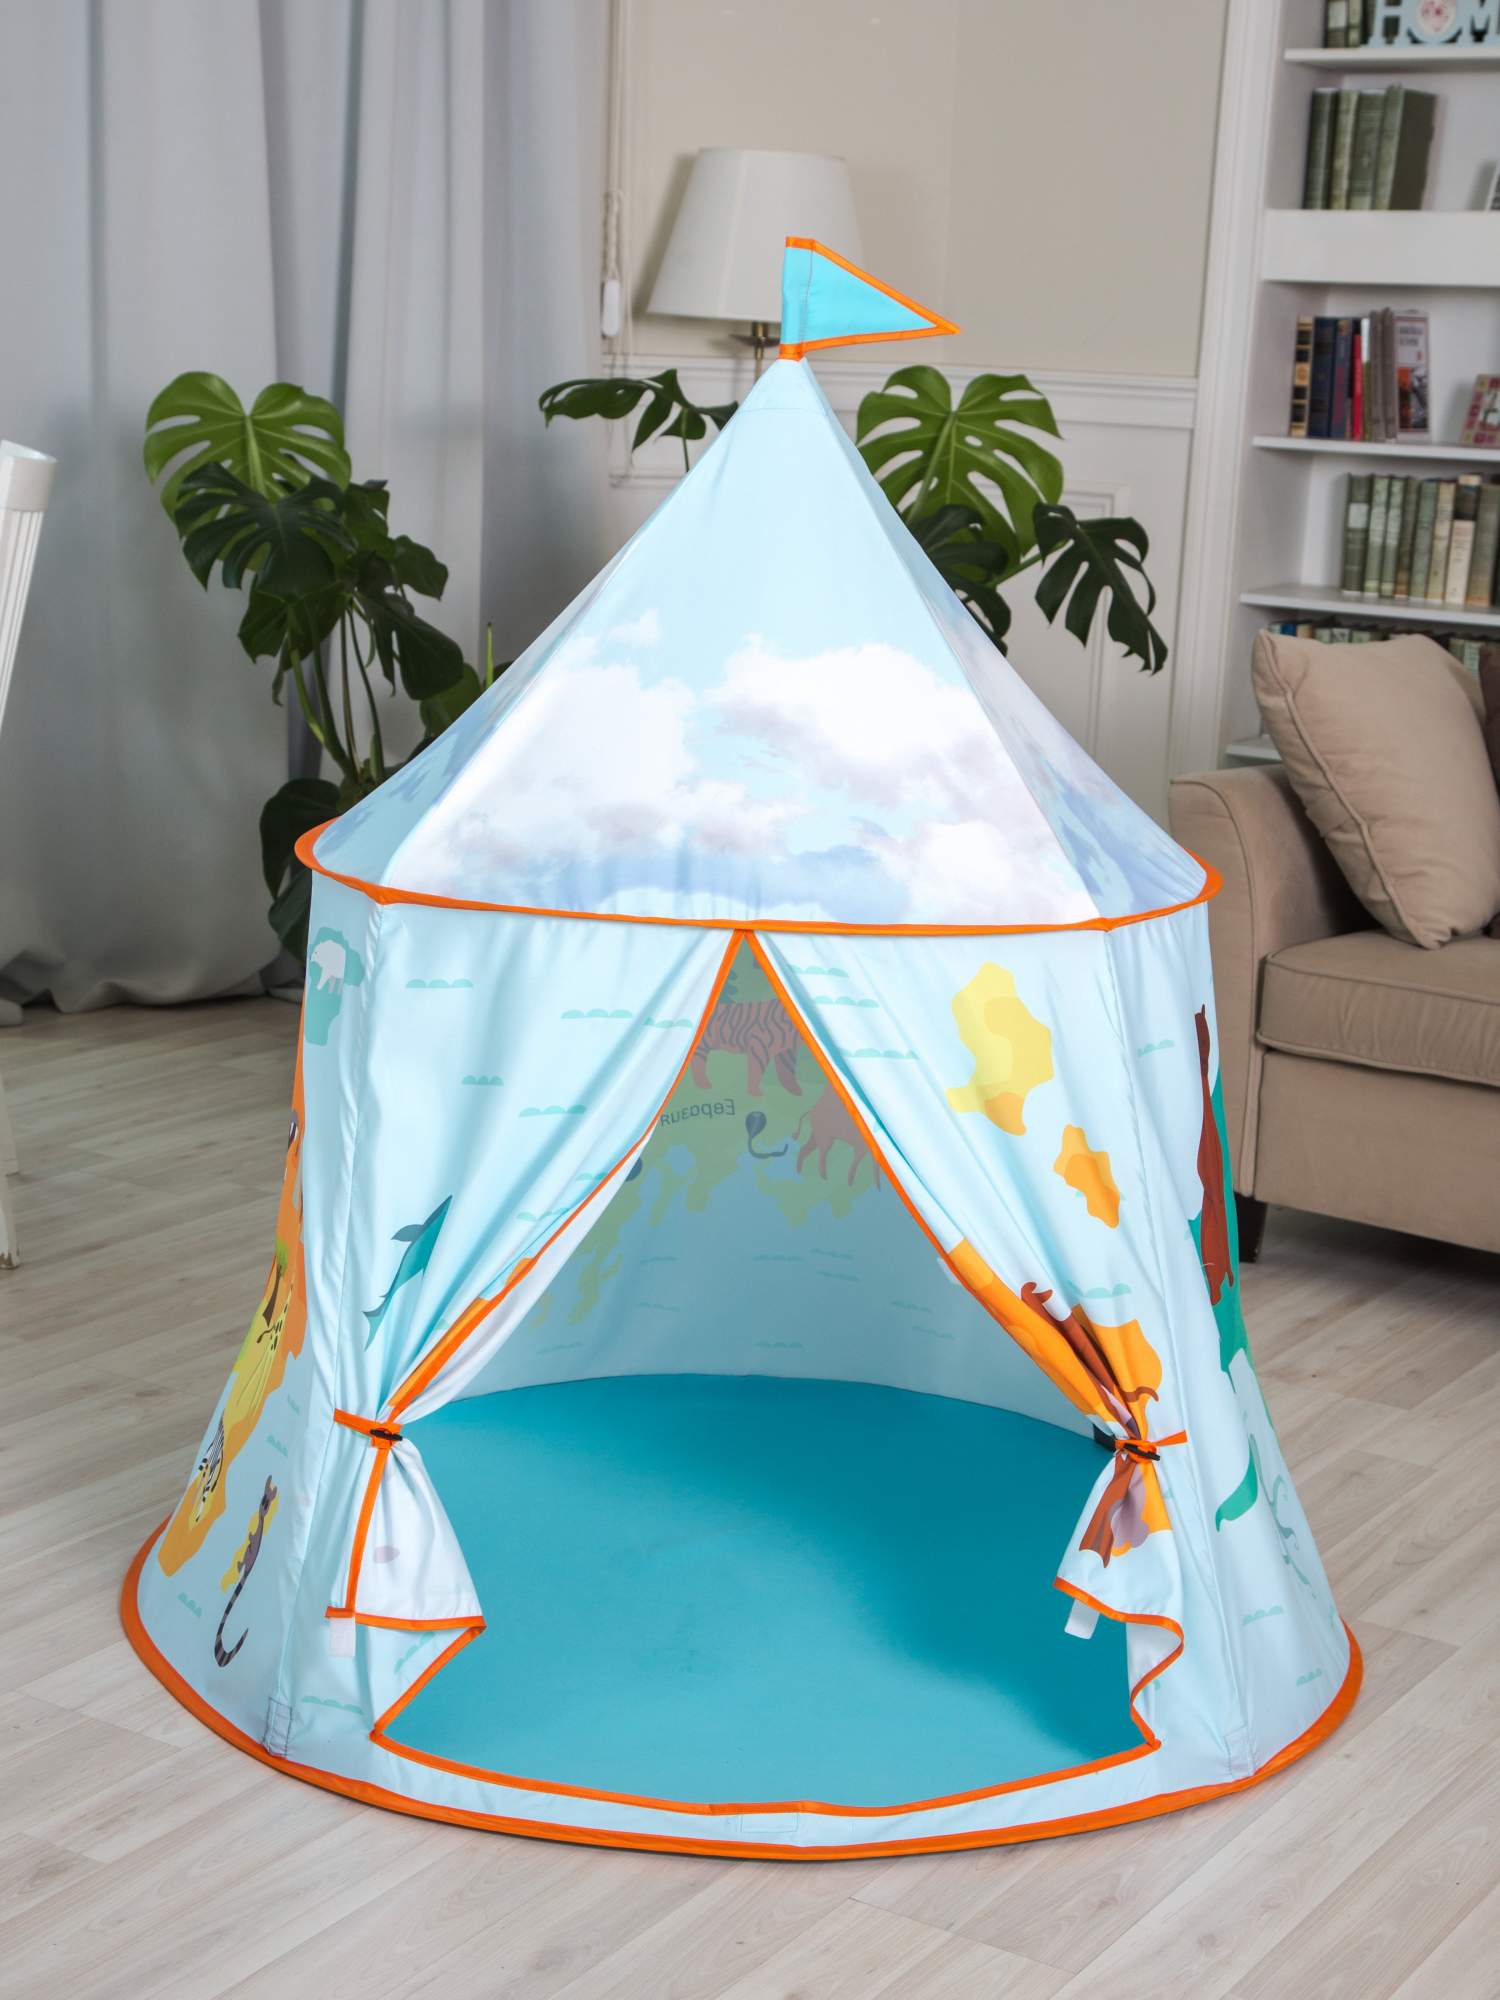 Игровая палатка CROCOZHUK шатер Мир путешественника